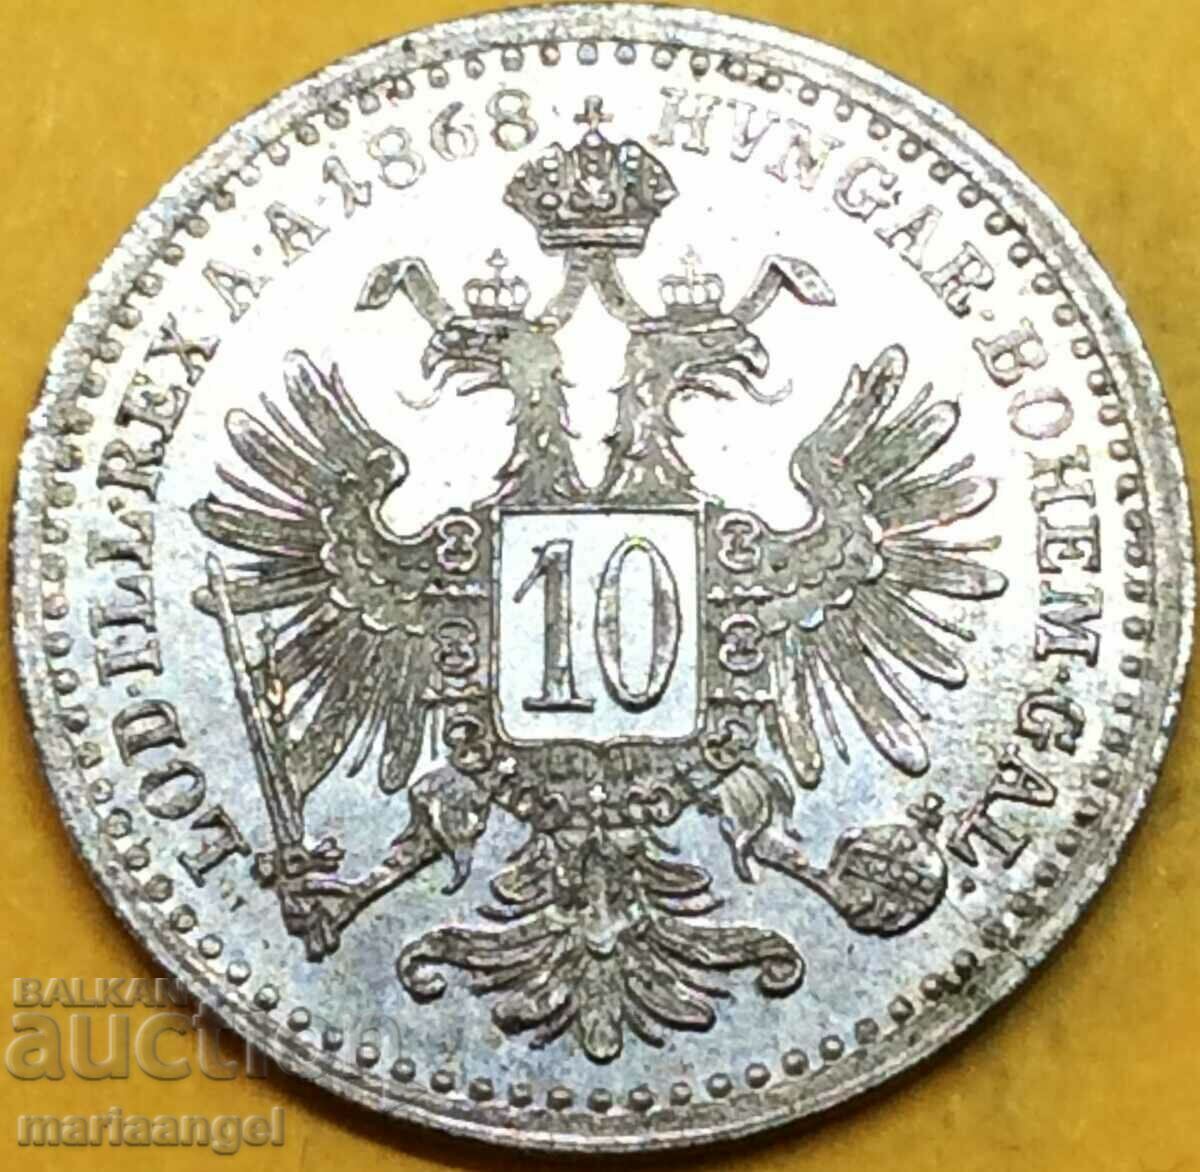 10 Kreuzer 1868 Ουγγαρία Franz Joseph Silver - αρκετά σπάνιο